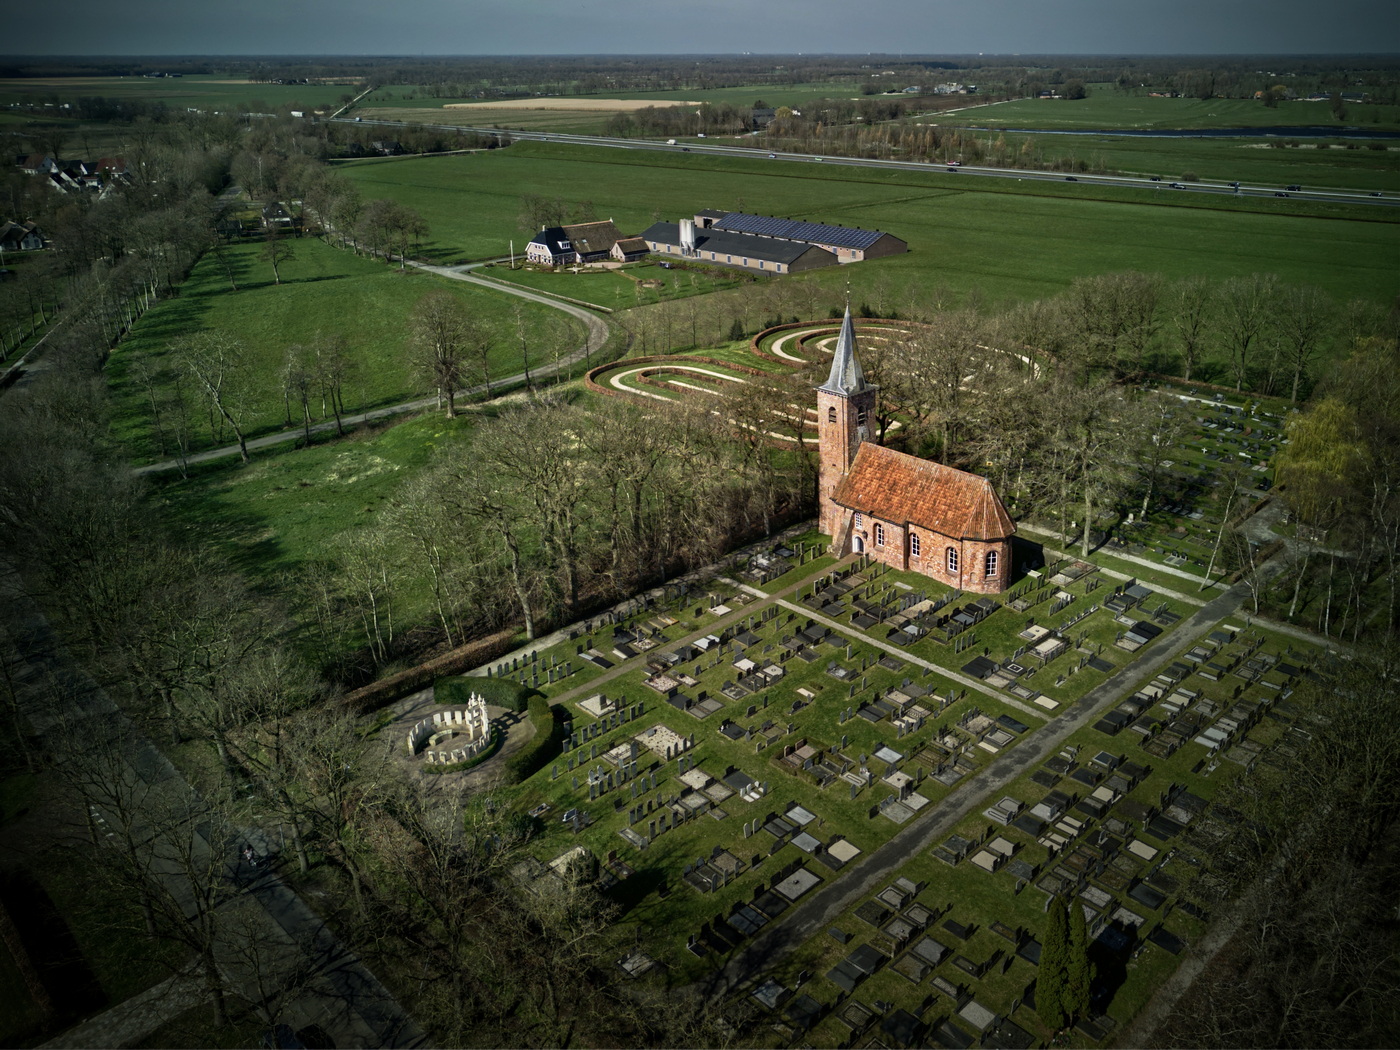 Dronefoto: ©Jur Kuipers. De kerk het kerkhof en het monument te Marum.